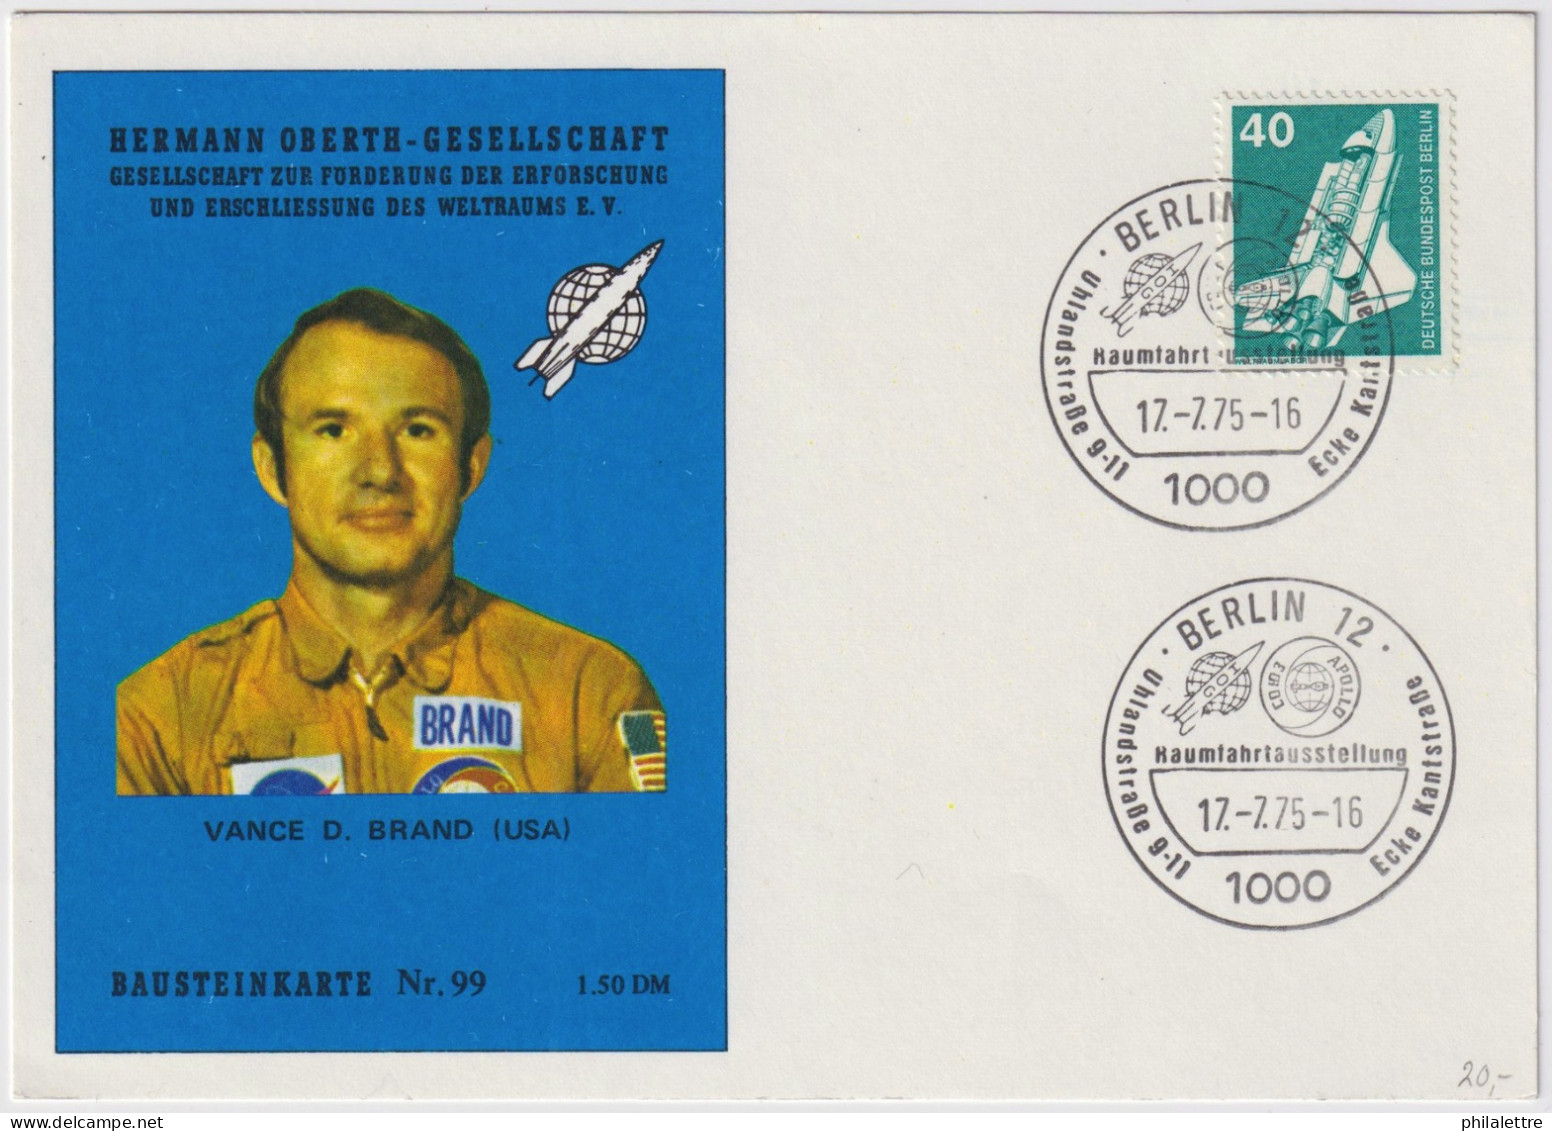 ALLEMAGNE / GERMANY - 1975 Mi.850 40pf Spacelab On Card From The BERLIN RAUMFAHRTAUSSTELLUNG (Bausteinkarte Nr.99) - Brieven En Documenten